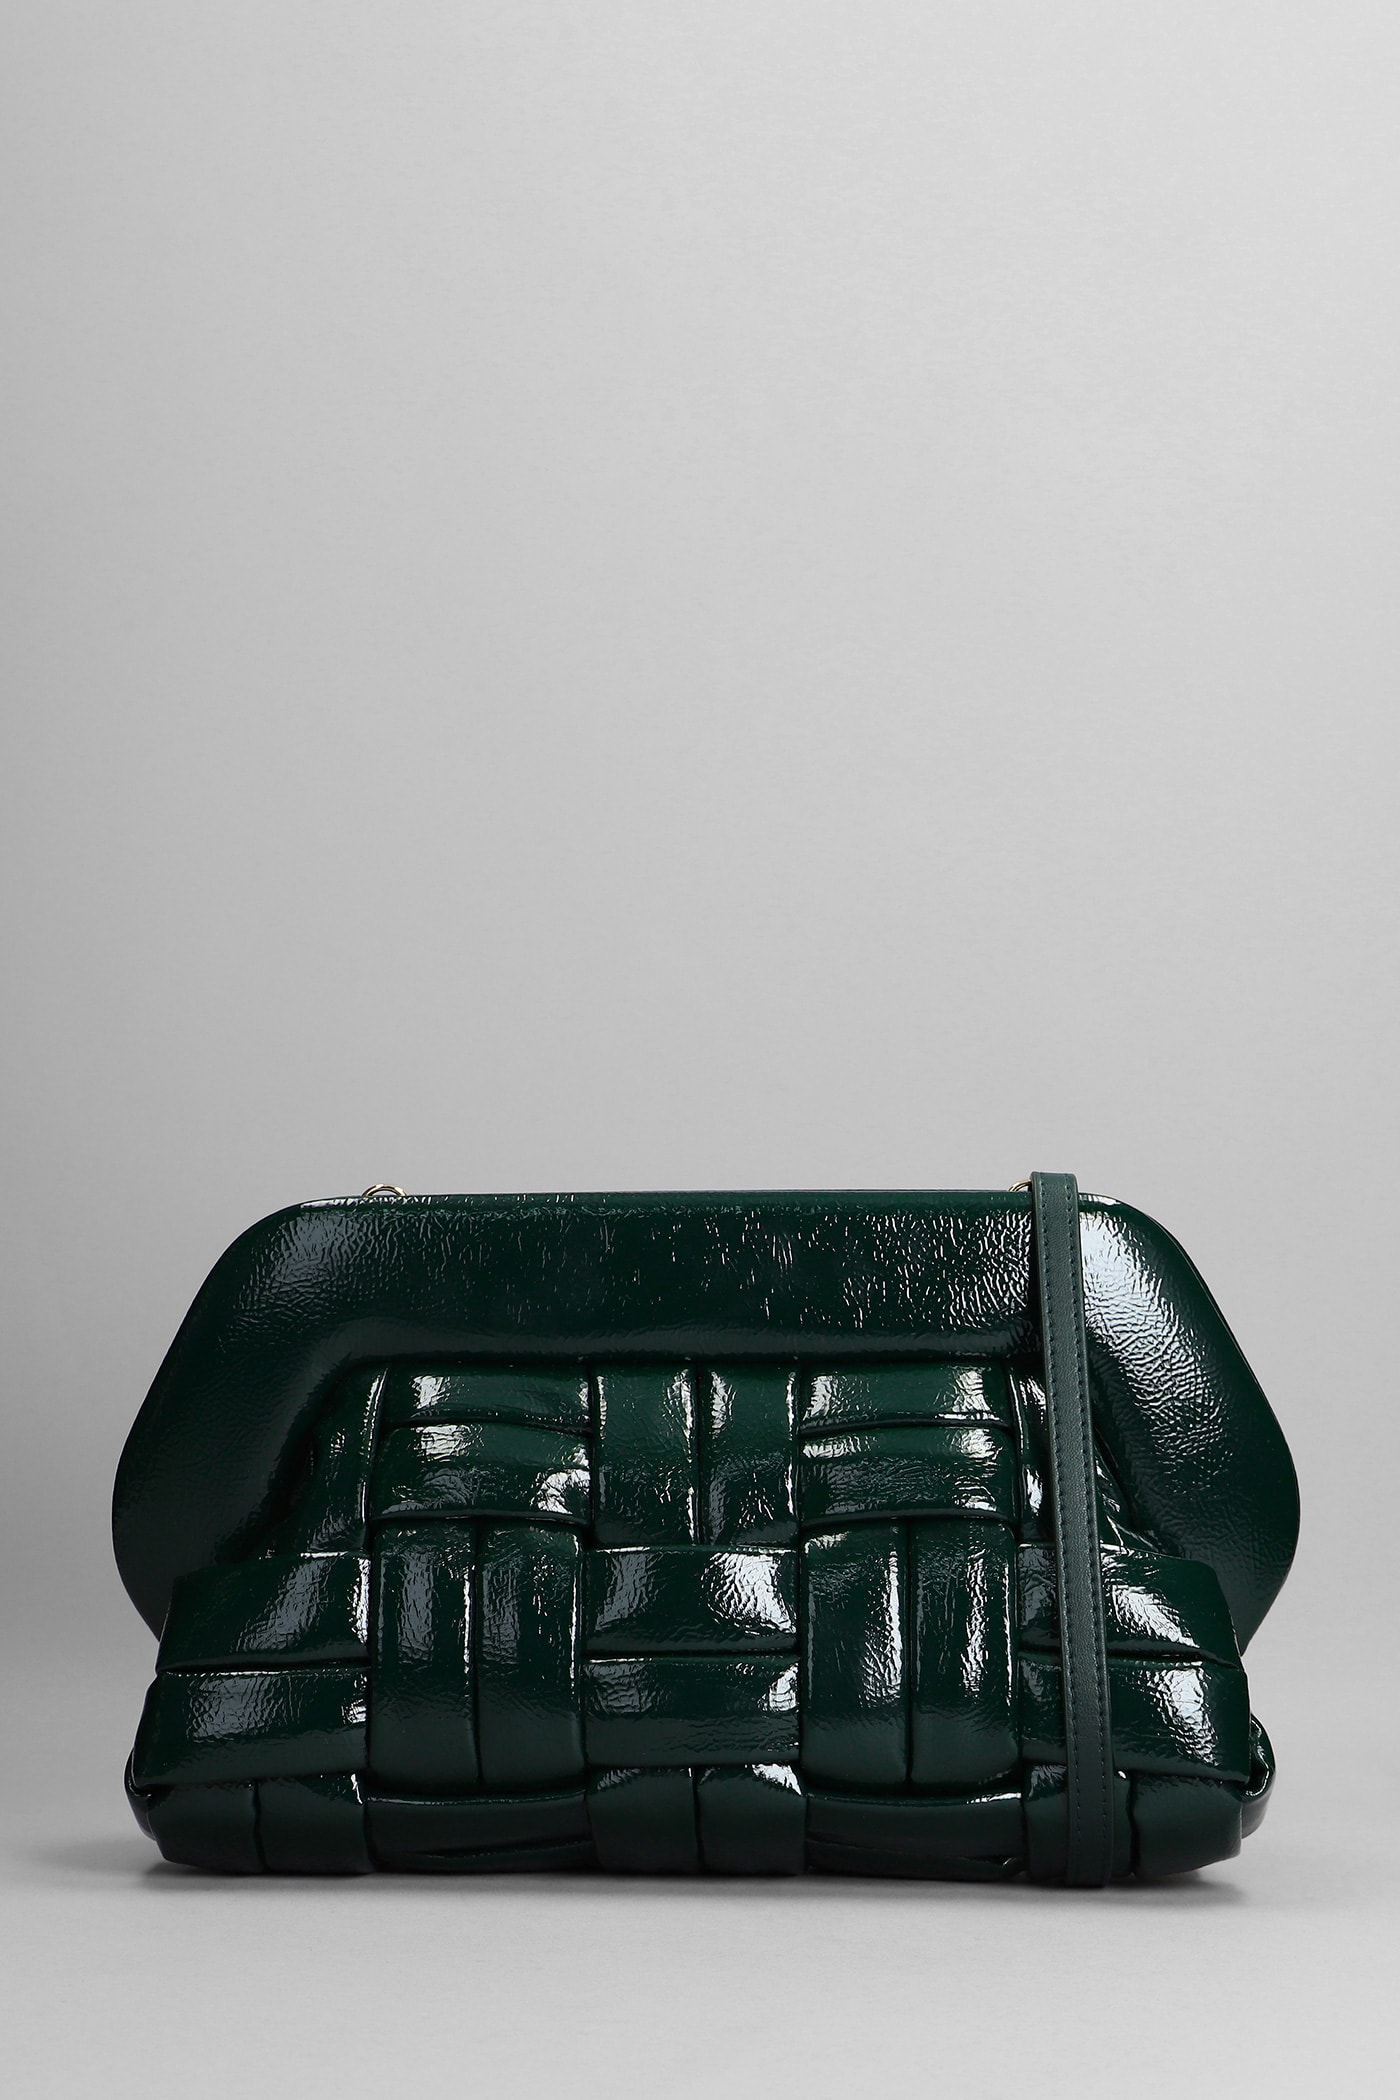 THEMOIRè Bios Weaved Clutch In Green Patent Leather